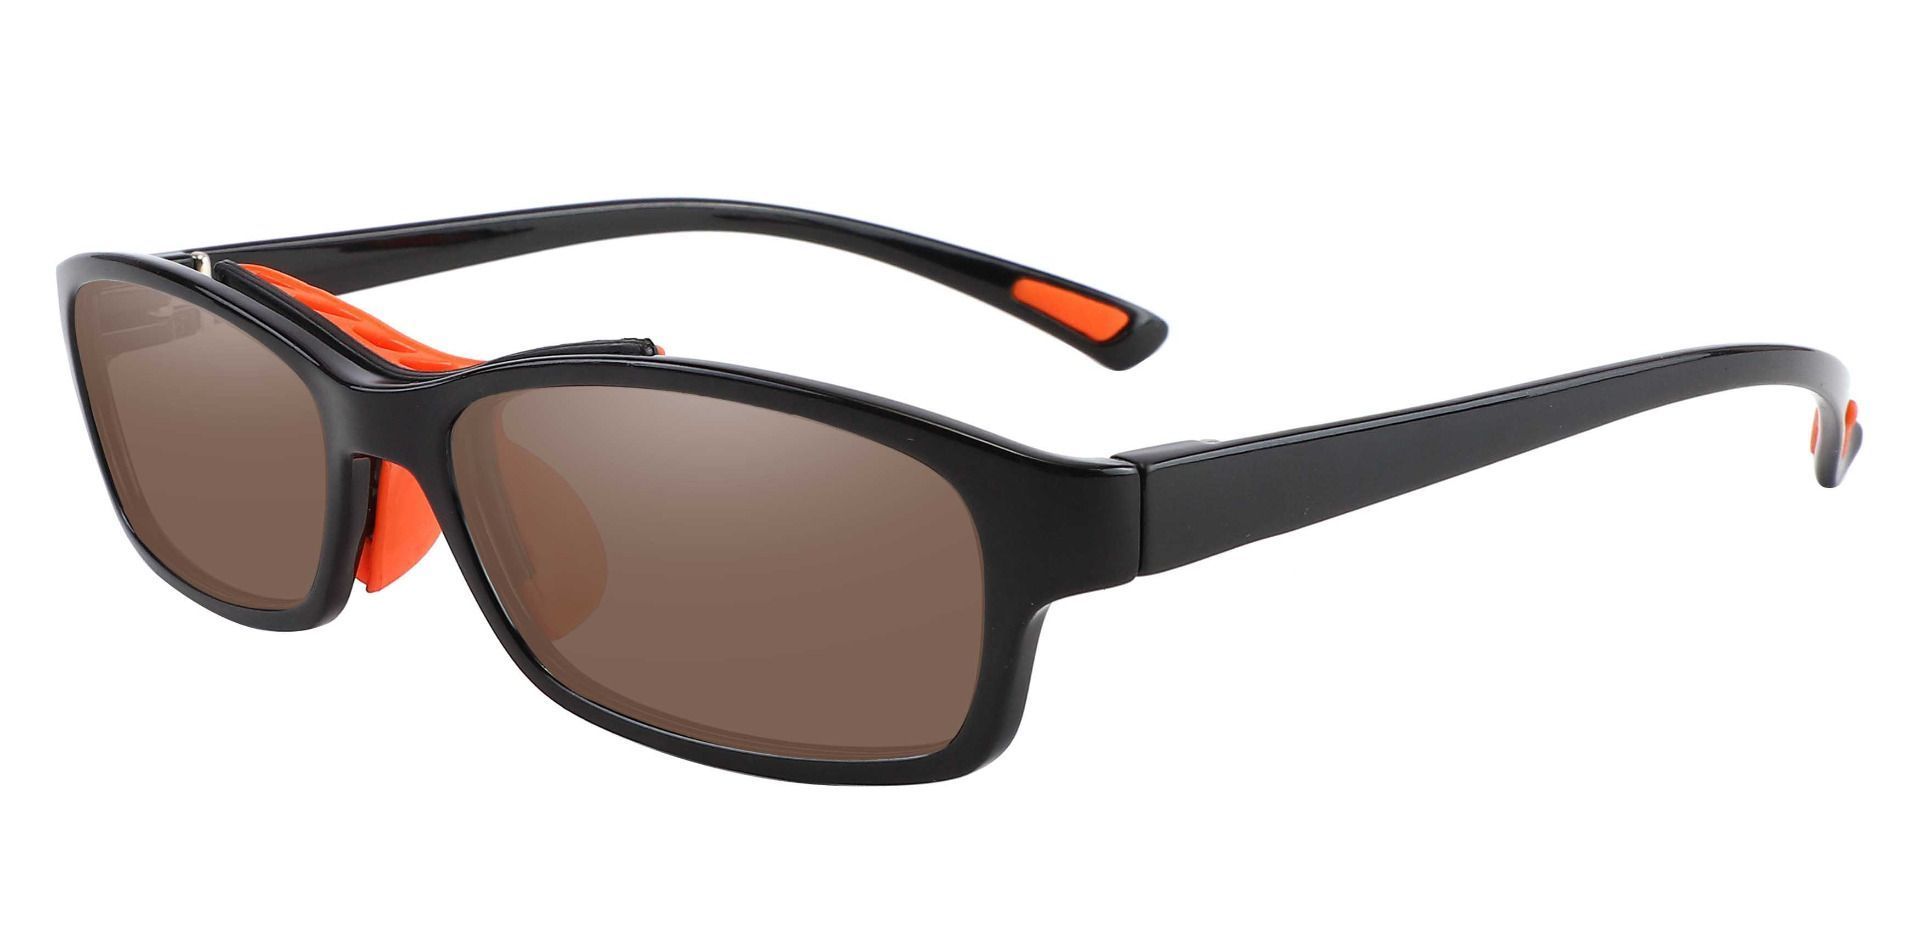 Glynn Rectangle Prescription Sunglasses - Black Frame With Brown Lenses